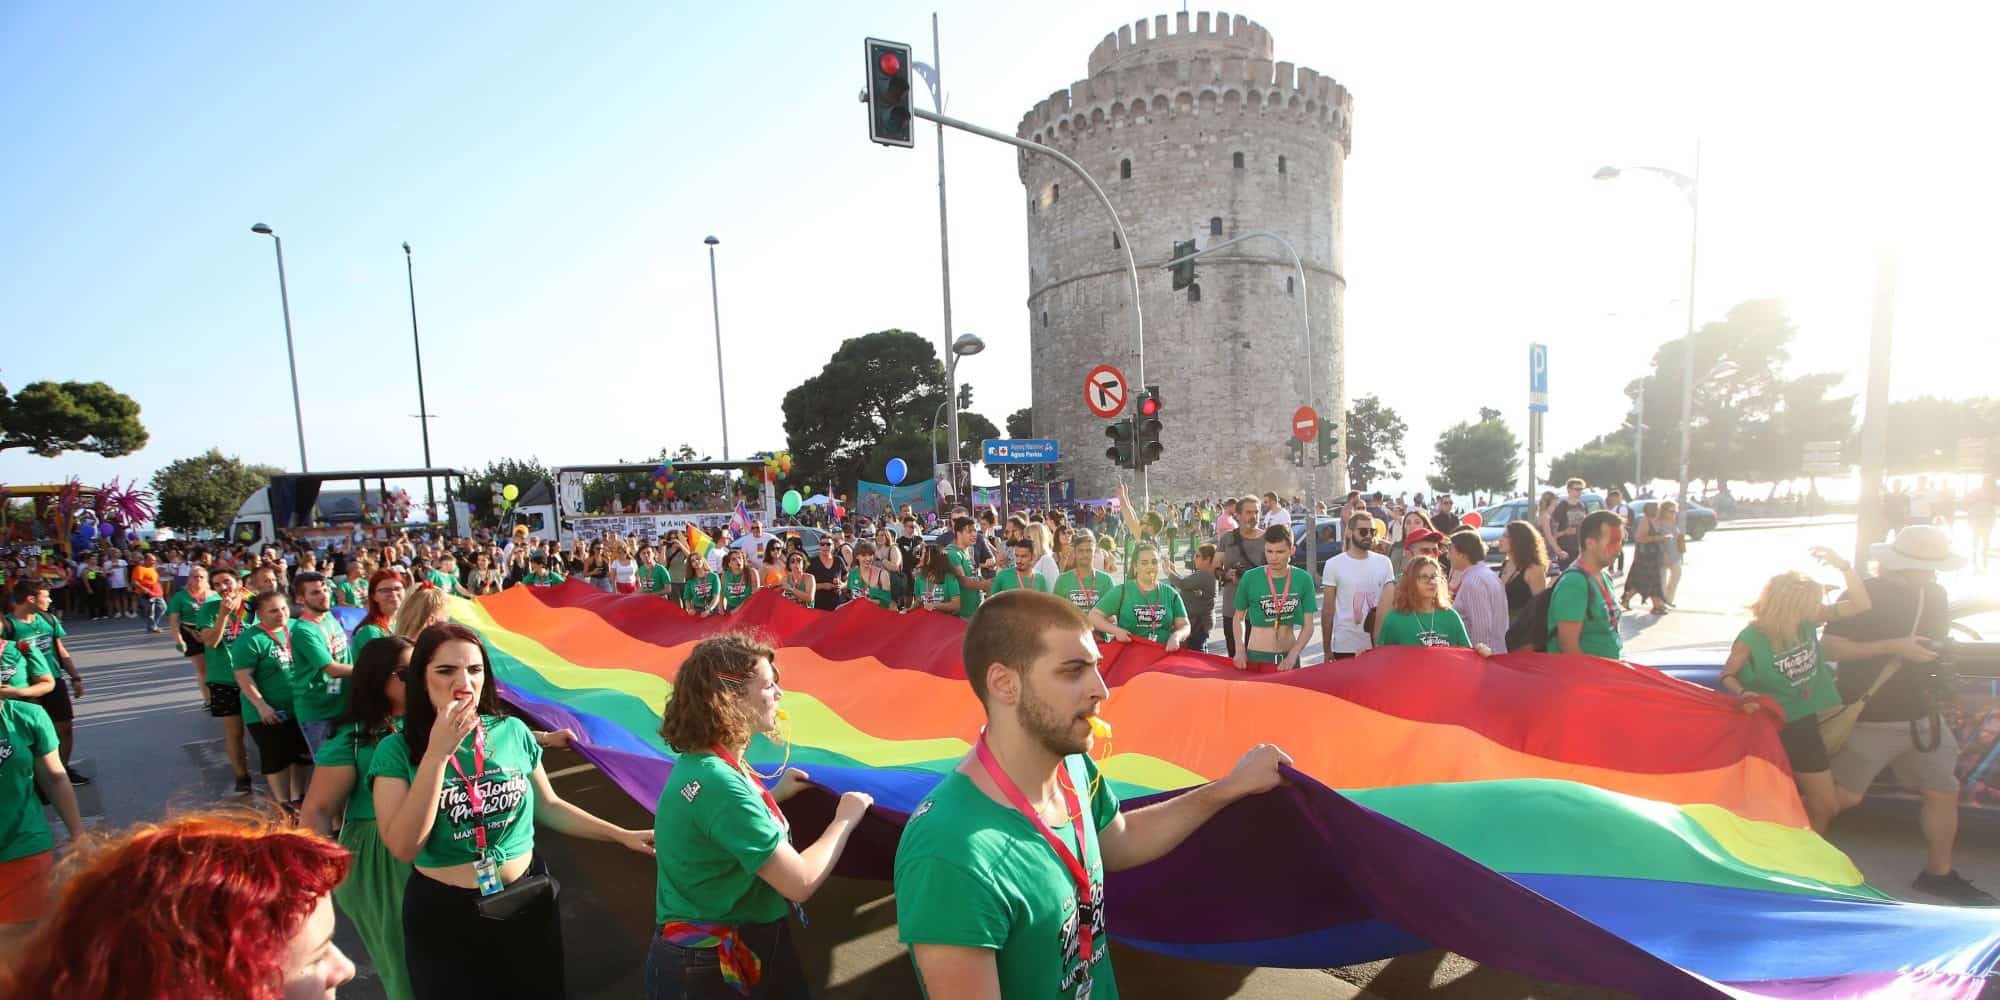 pride thessaloniki 9 7 2022 1 - Bloomberg: «Η Ελλάδα εντείνει τις προσπάθειες για την προώθηση των δικαιωμάτων της ΛΟΑΤΚΙ κοινότητας»